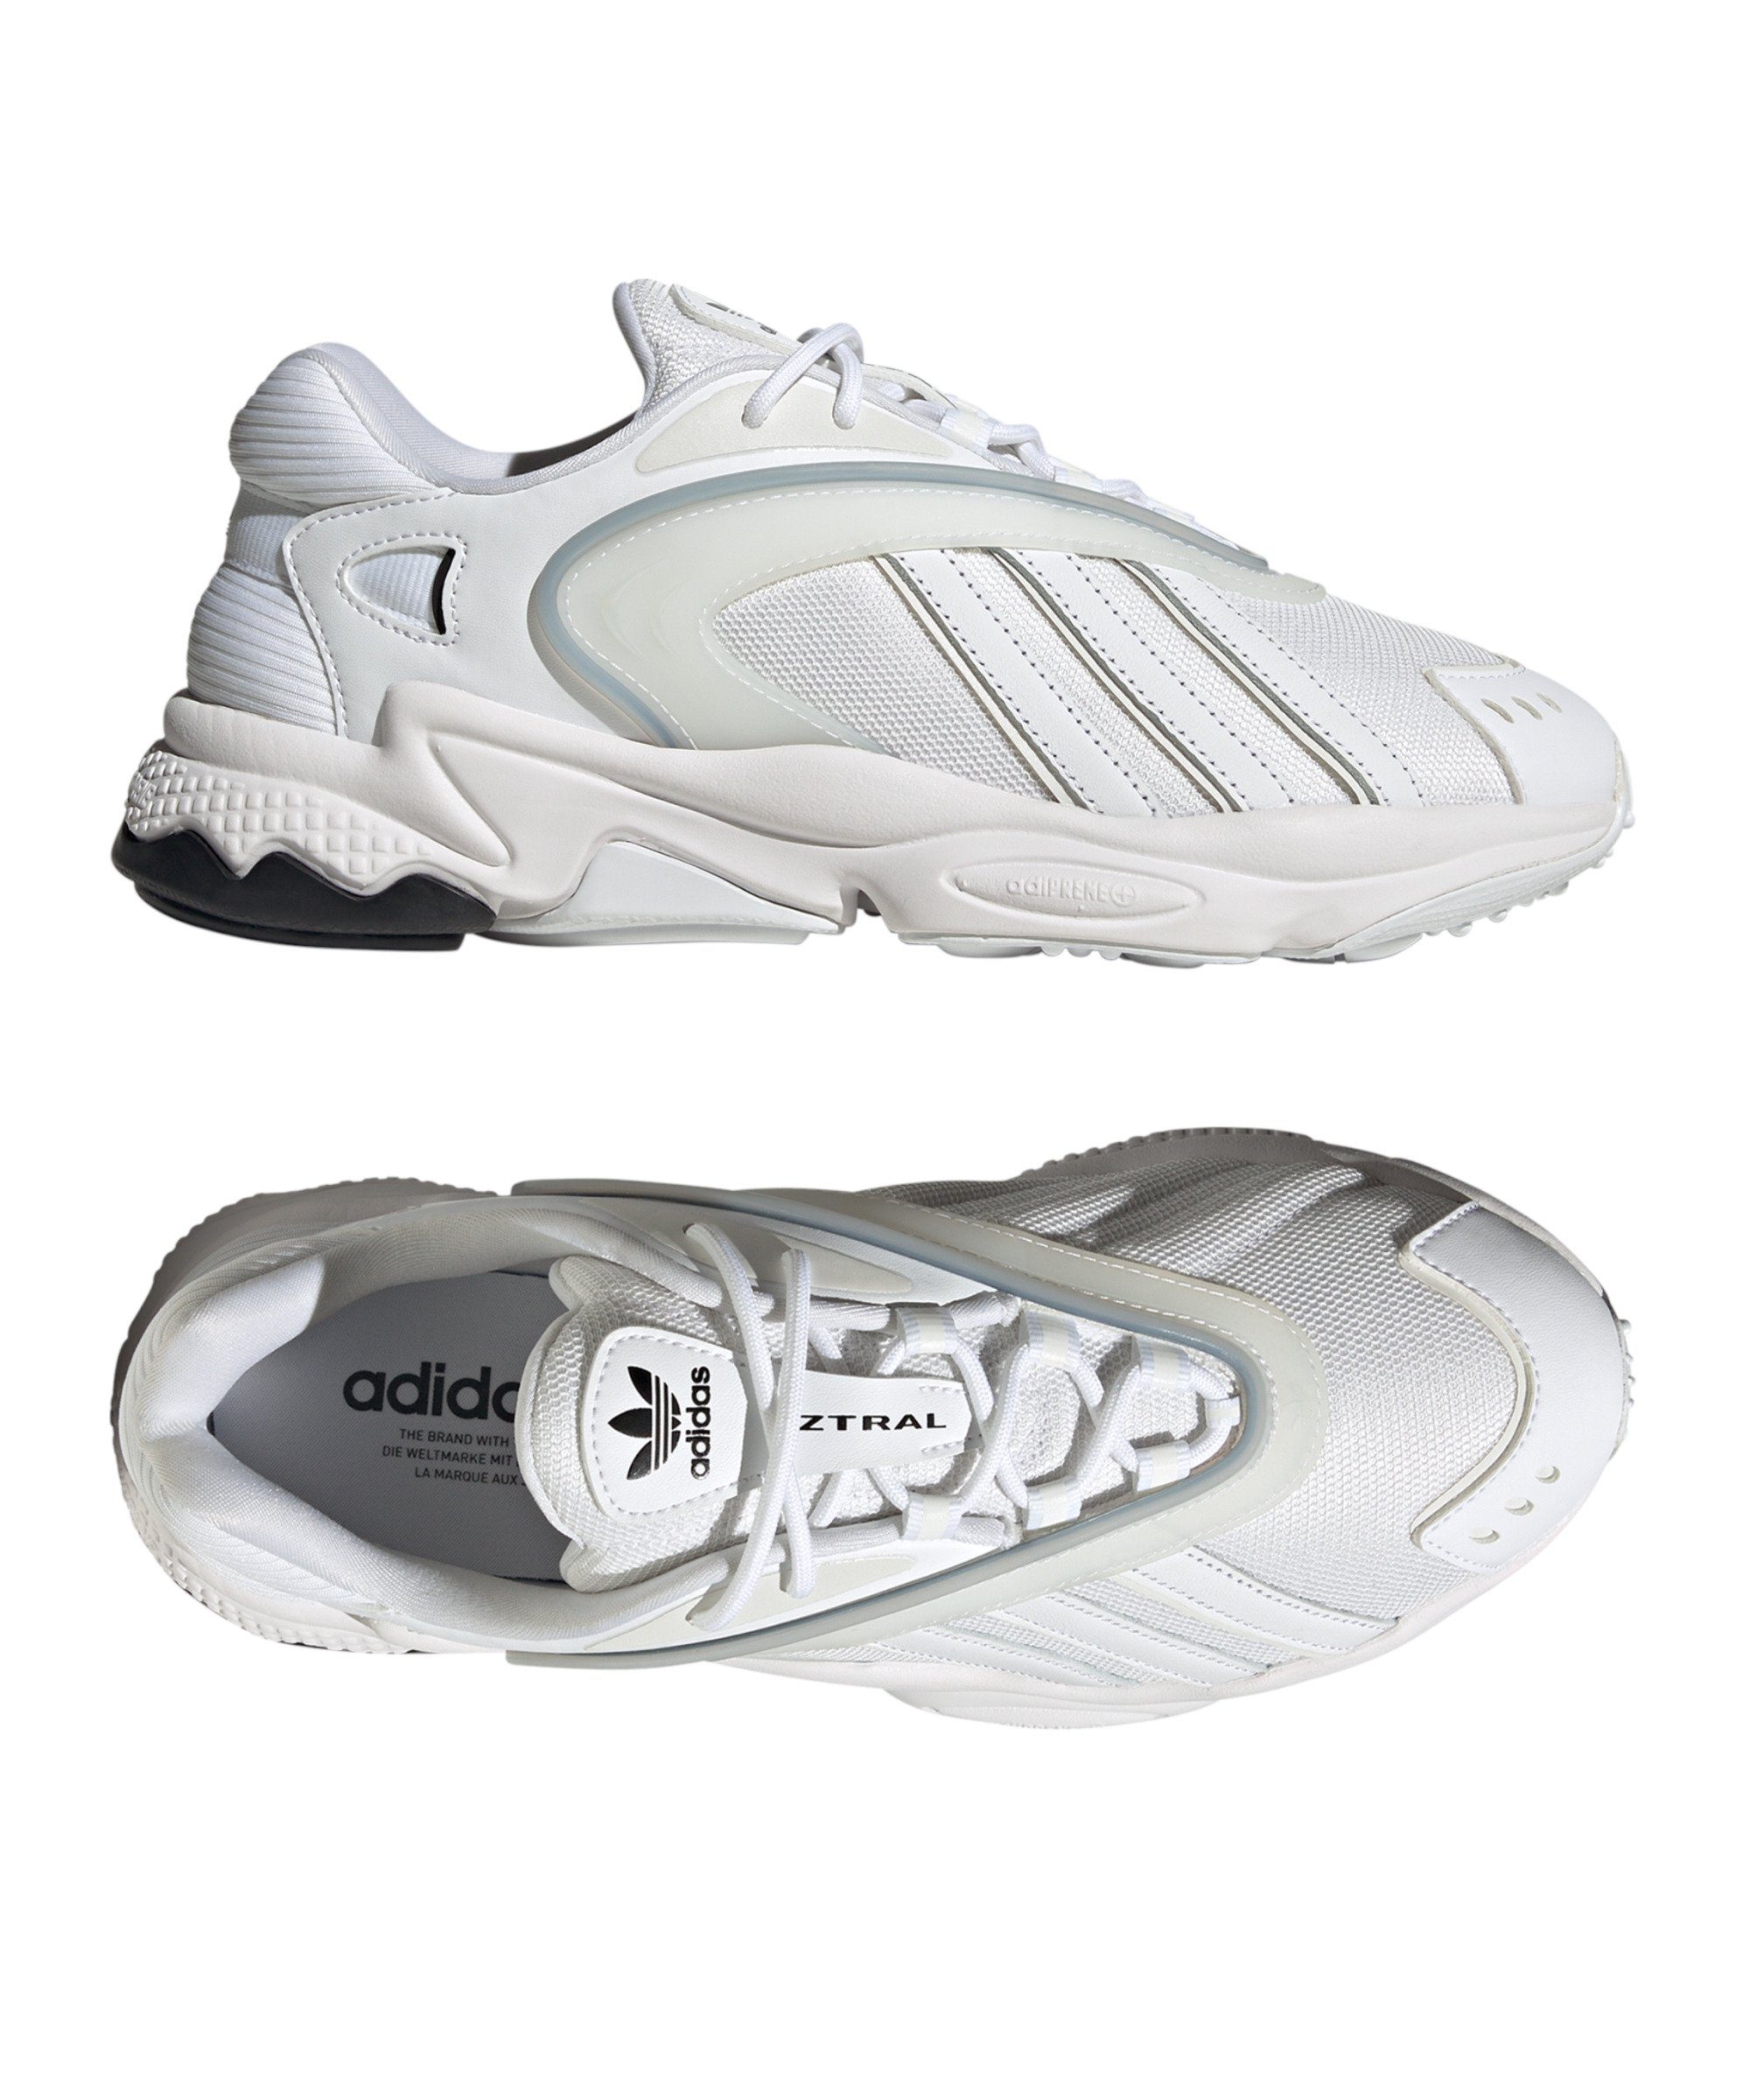 Sneaker weissweissschwarz adidas Originals Oztral